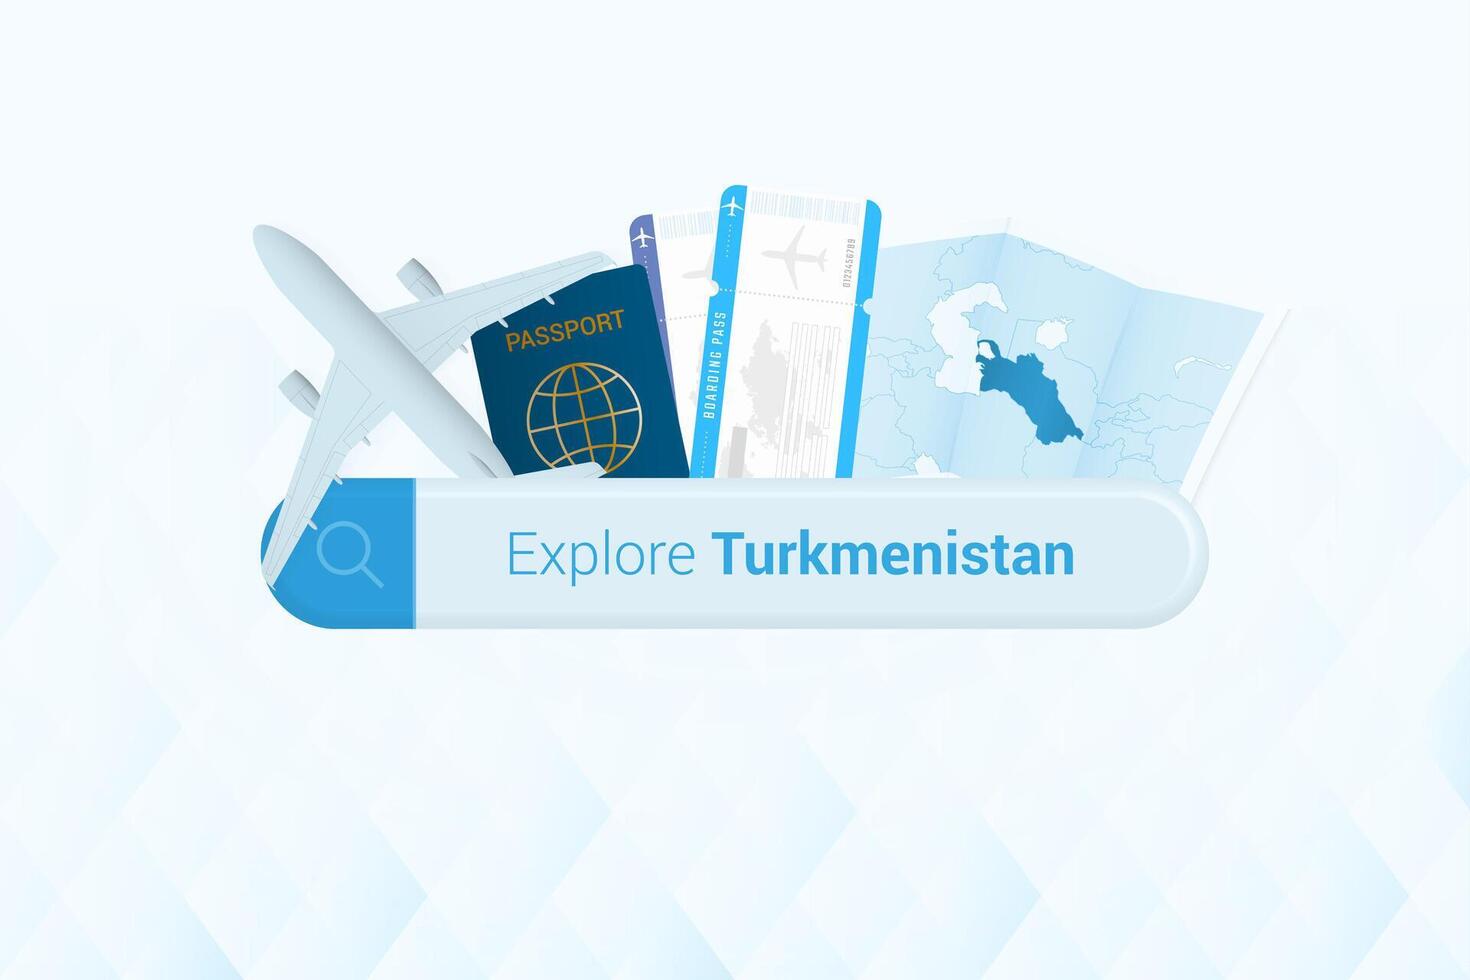 buscando Entradas a Turkmenistán o viaje destino en turkmenistán buscando bar con avión, pasaporte, embarque aprobar, Entradas y mapa. vector